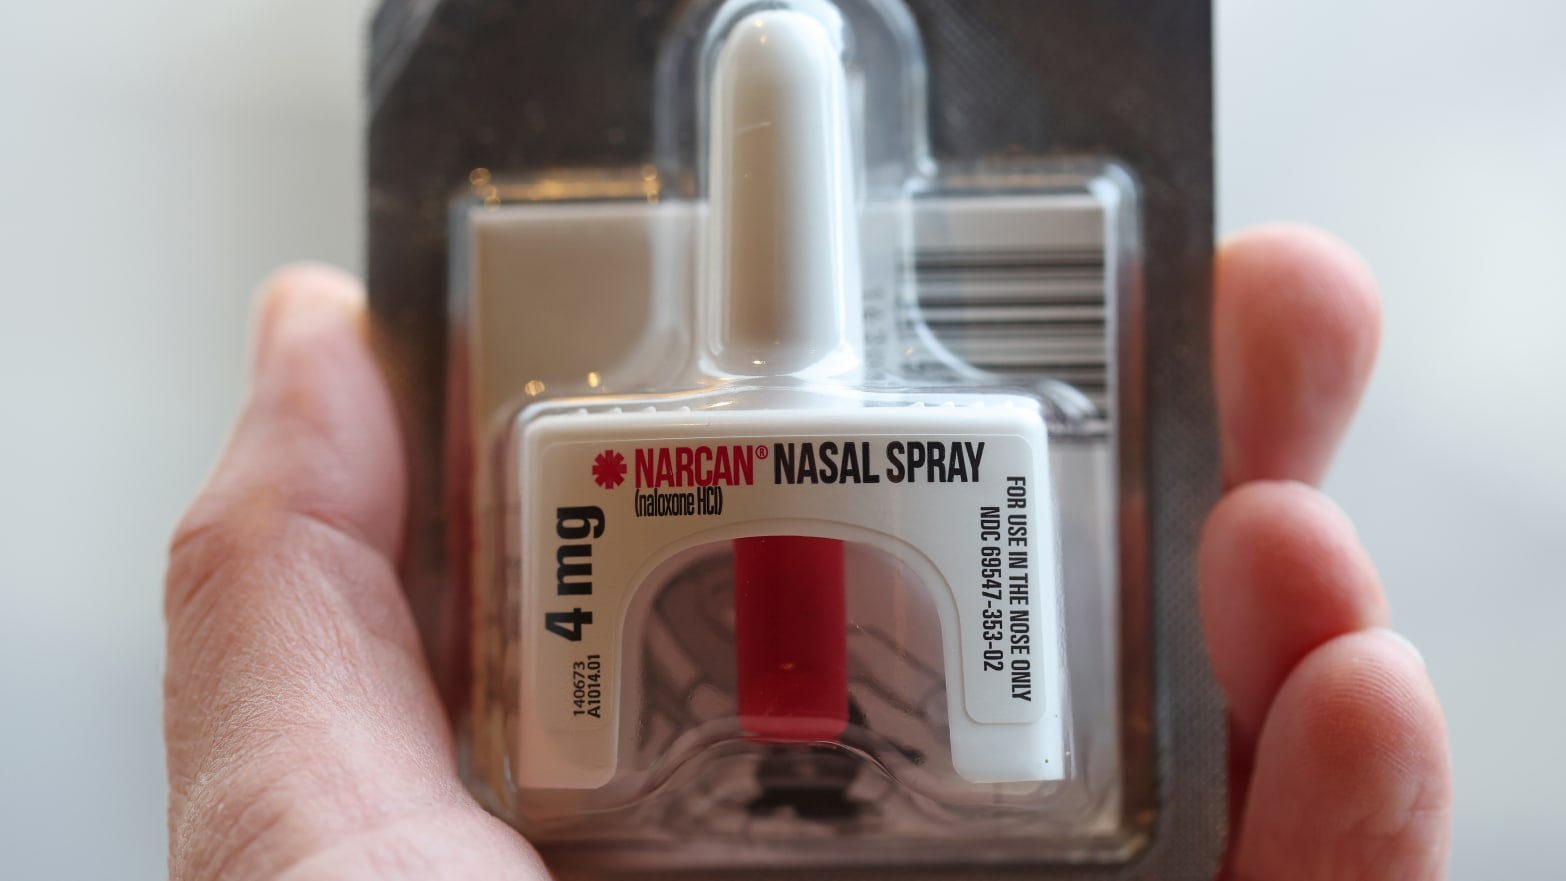 A package of Narcan (Naloxone HCI) nasal spray